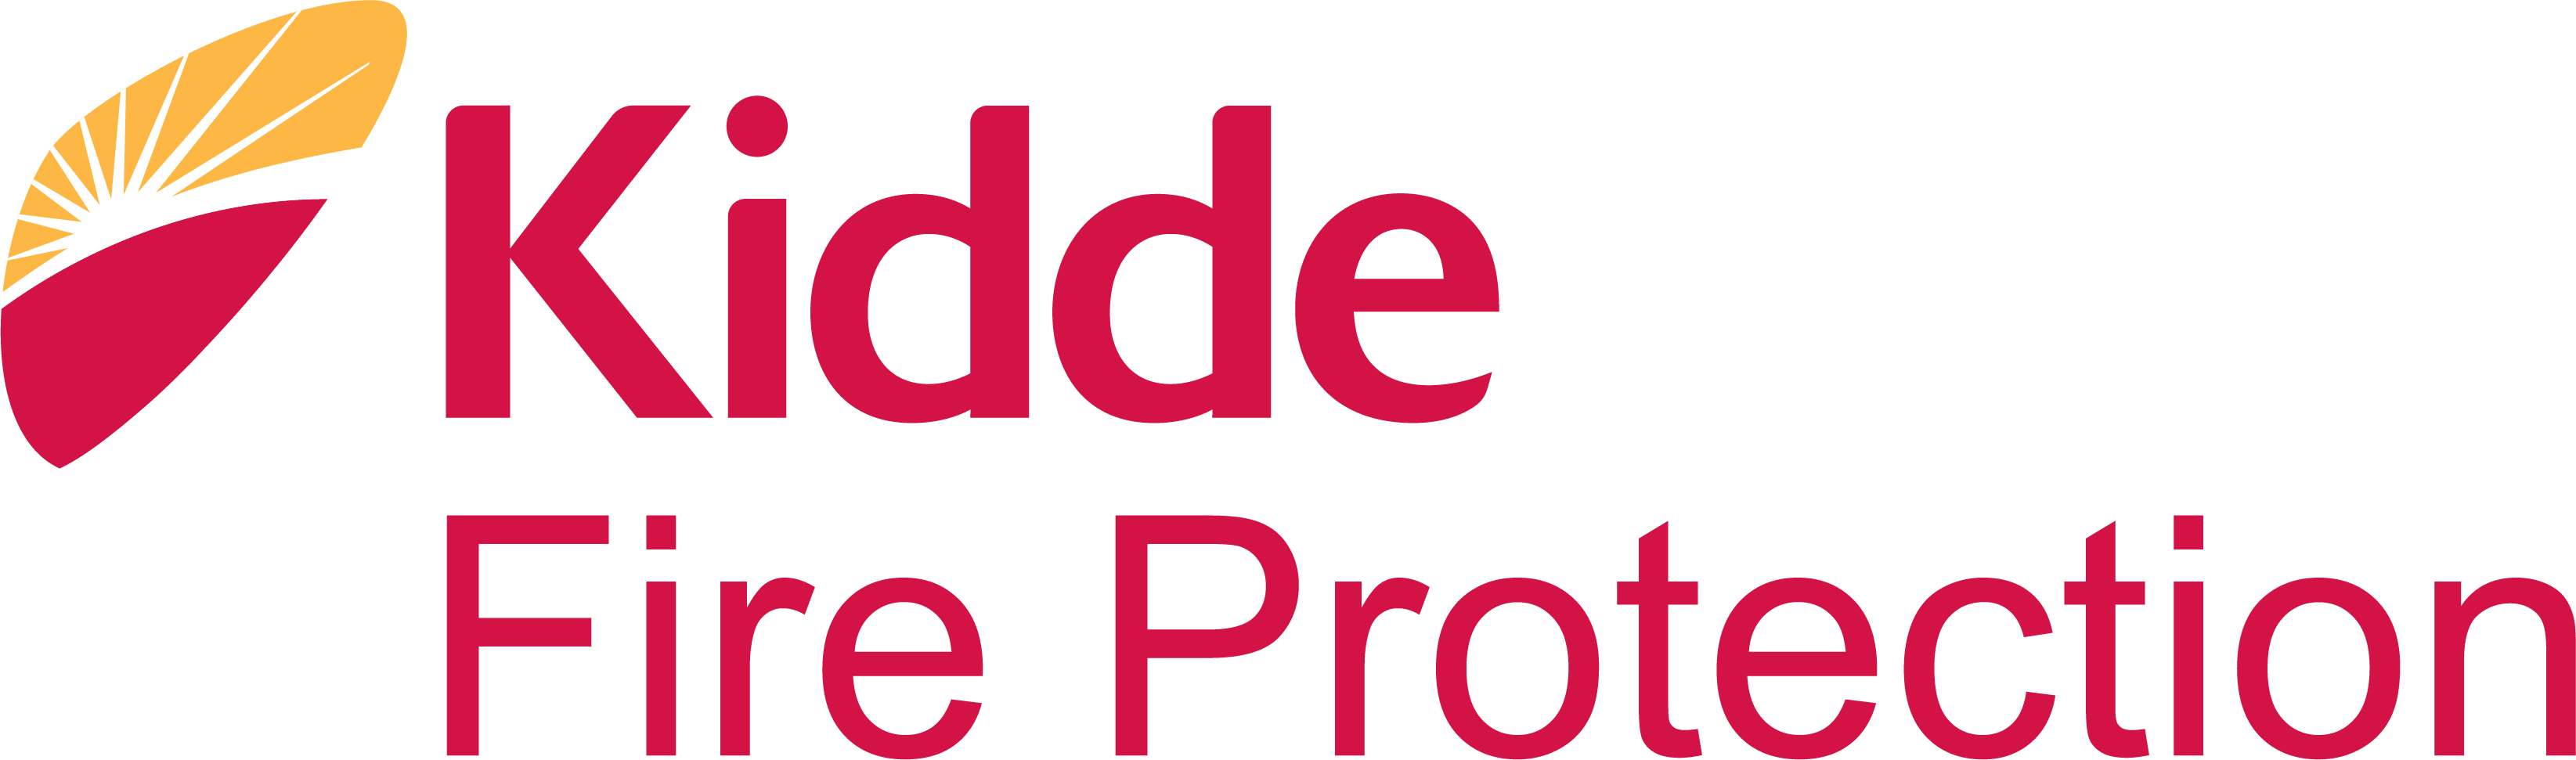 Kidde-Fire-Protection-logo